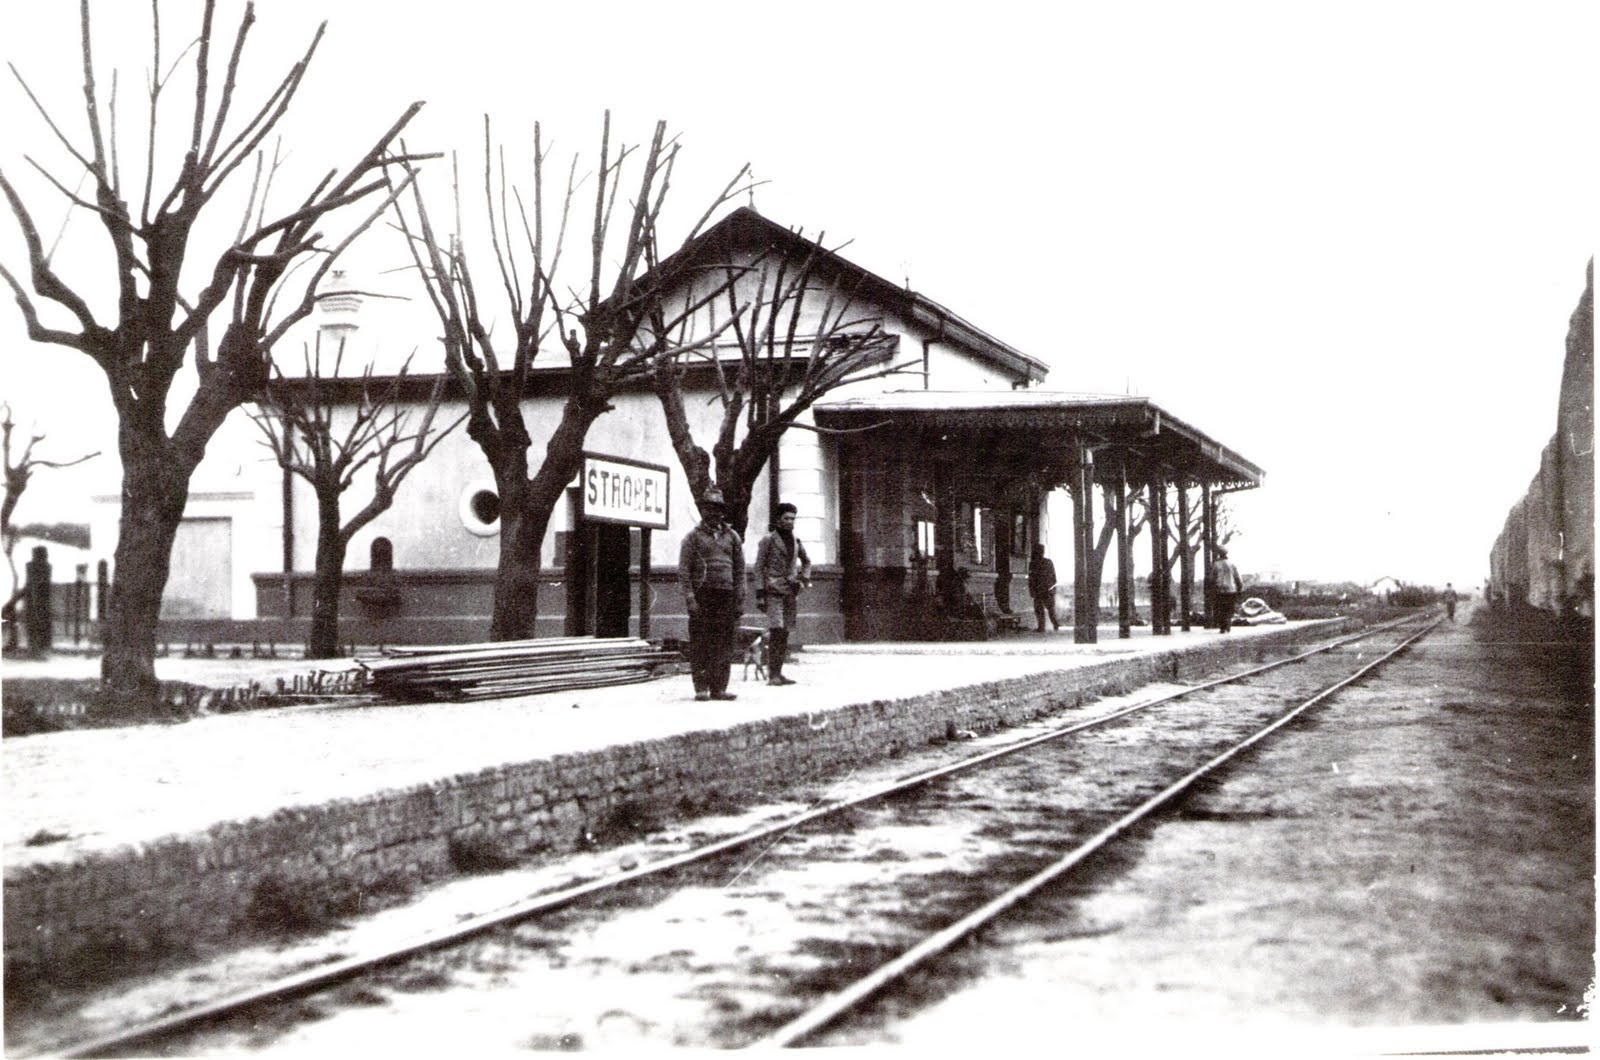 Train Station in Strobel (1955) Source: diamantinas.blogspot.com